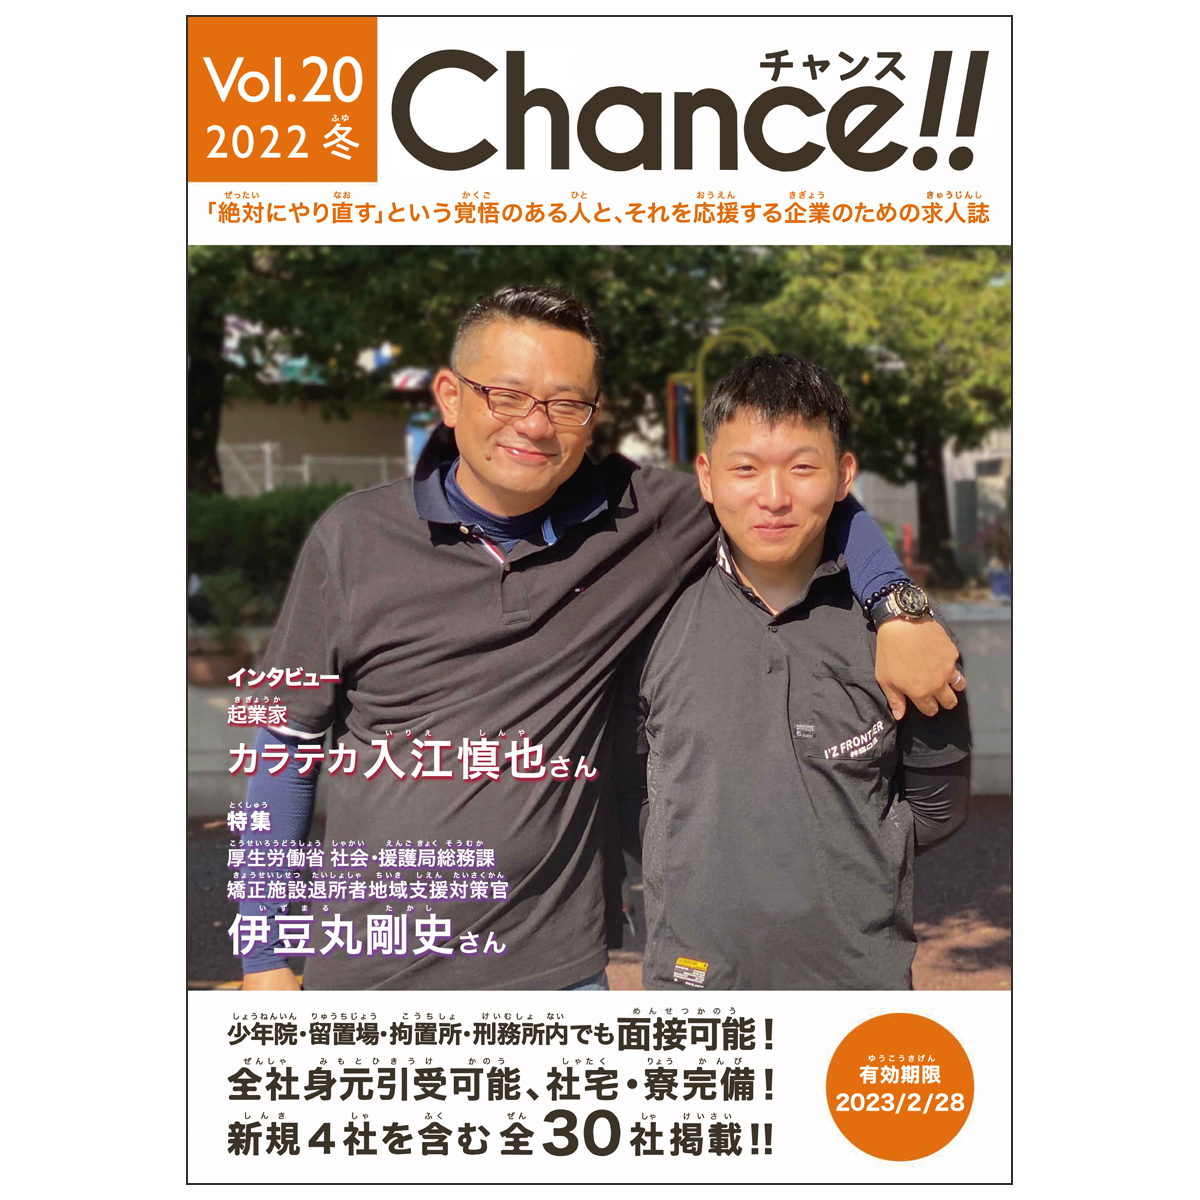 Chance!! Vol.20